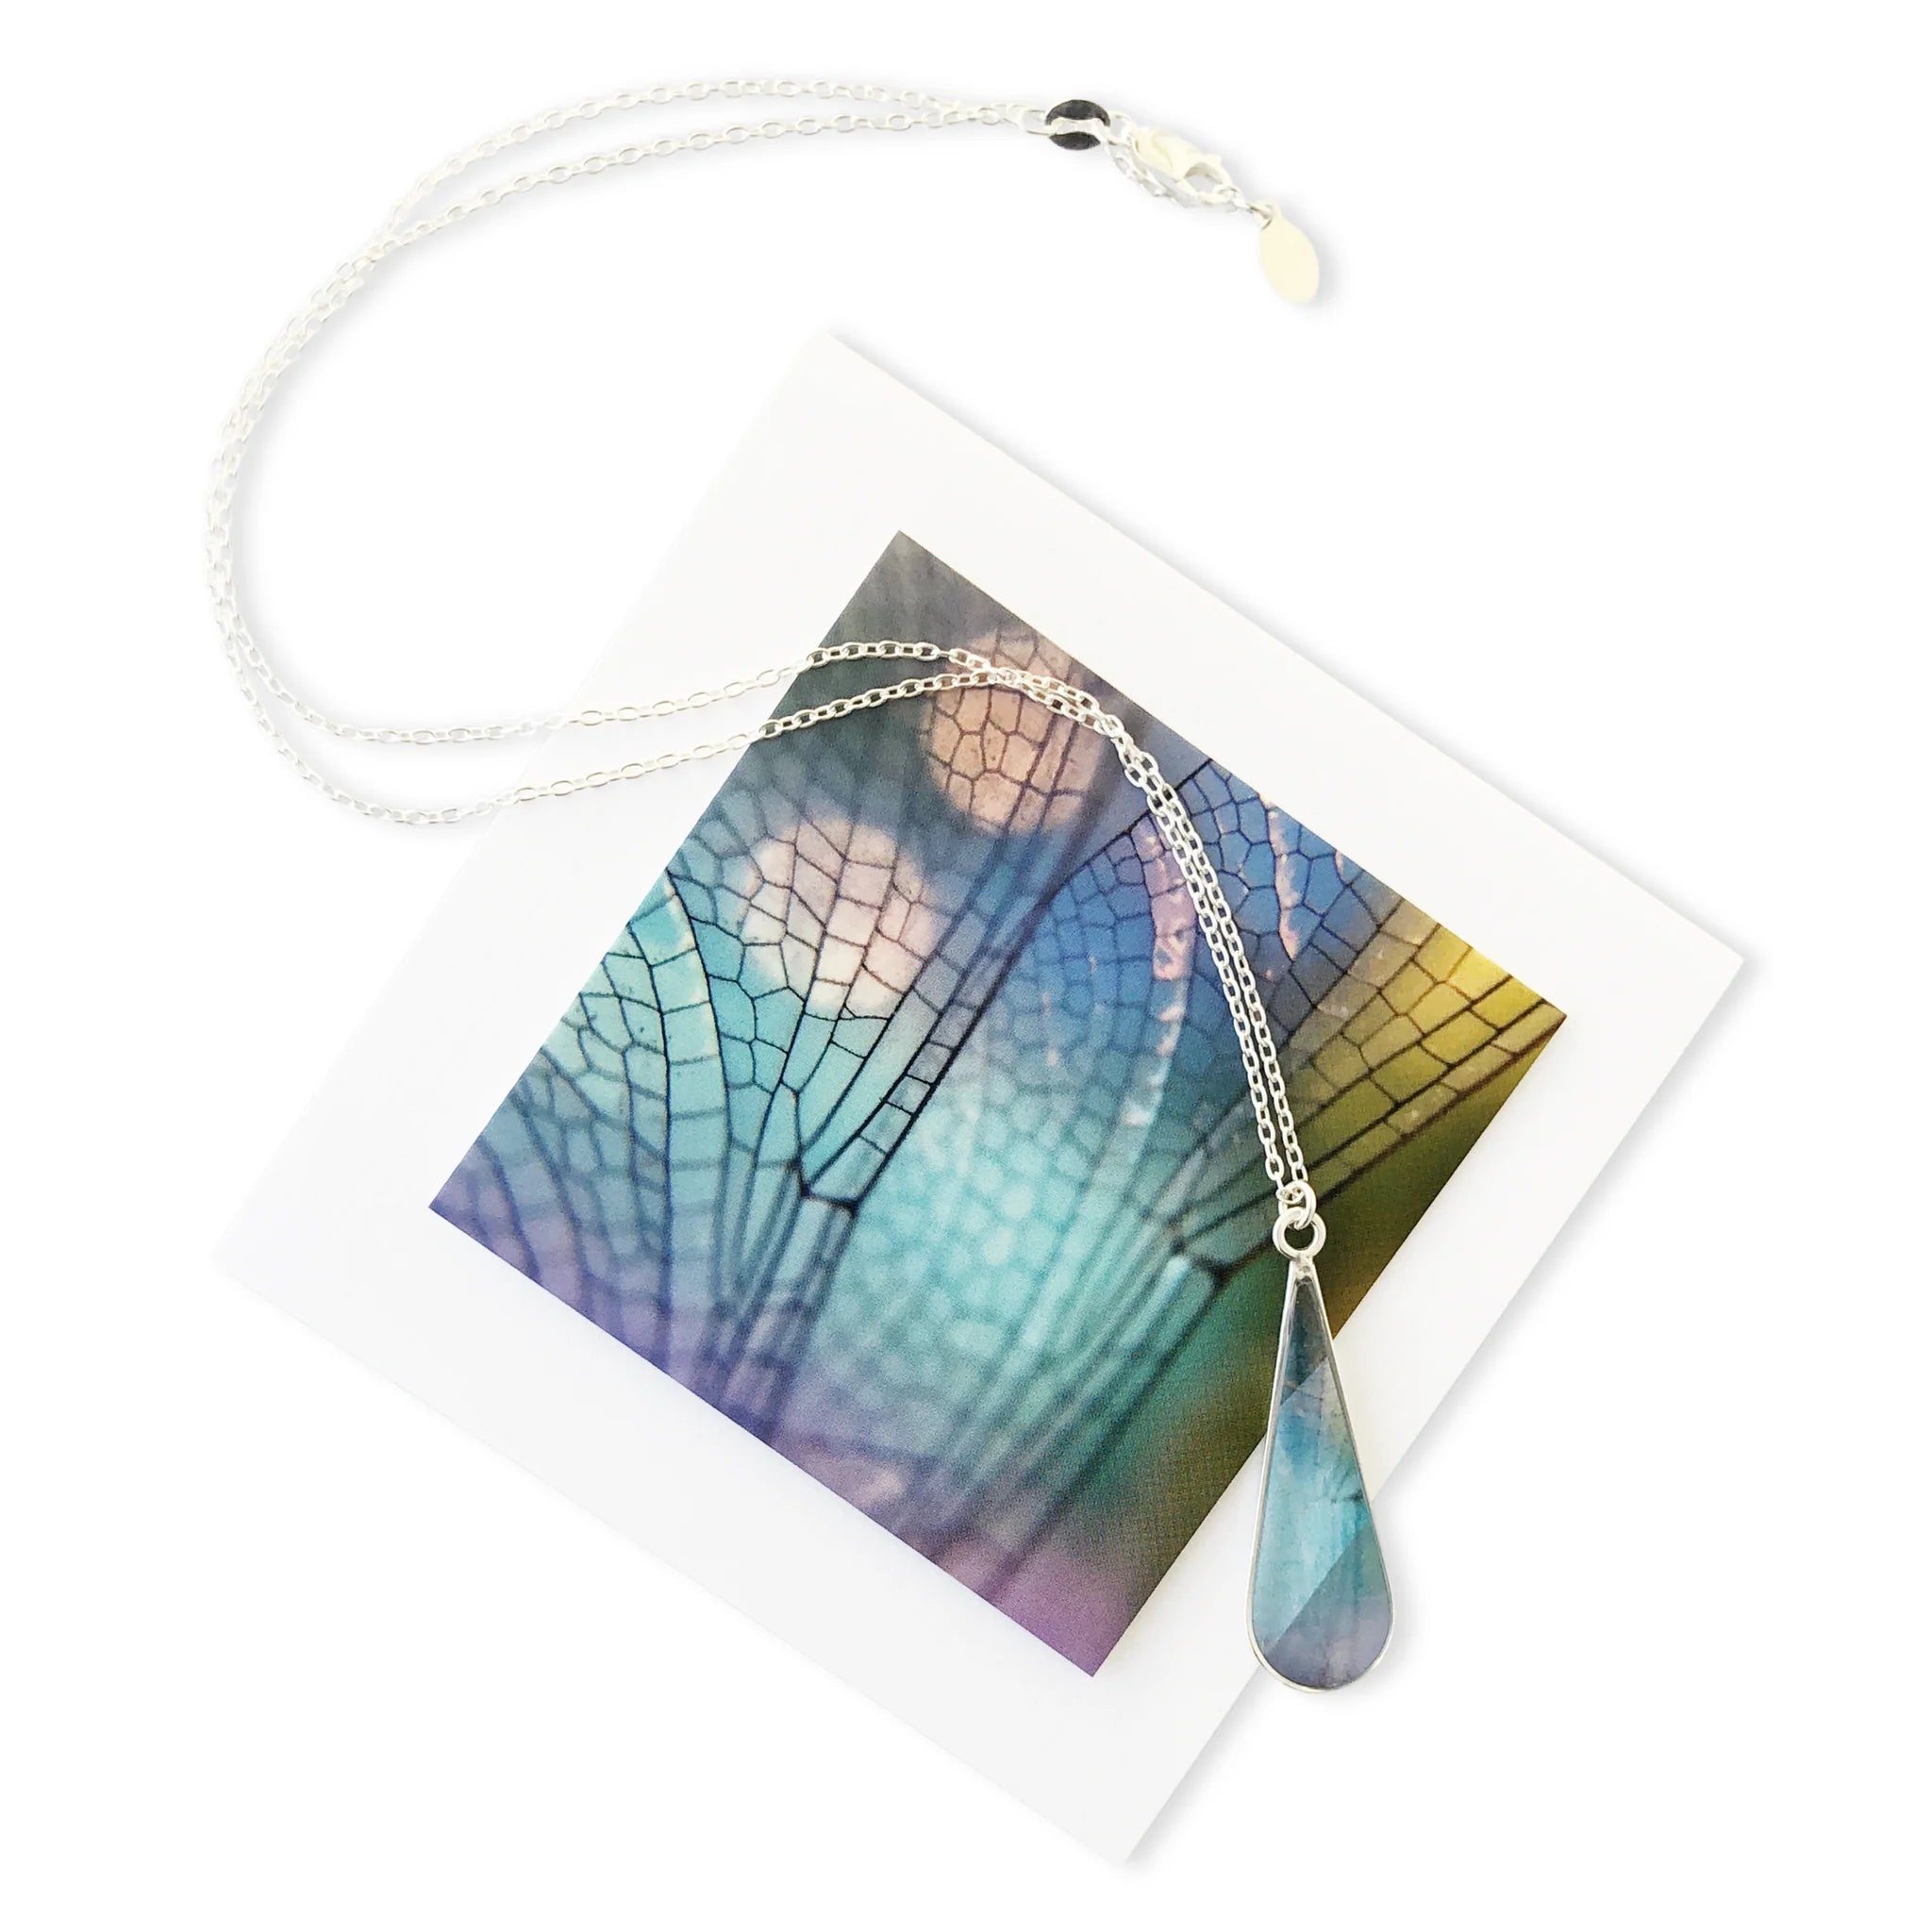 Handmade Dragonfly "Summer Wing" Silver Teardrop Pendant Necklace